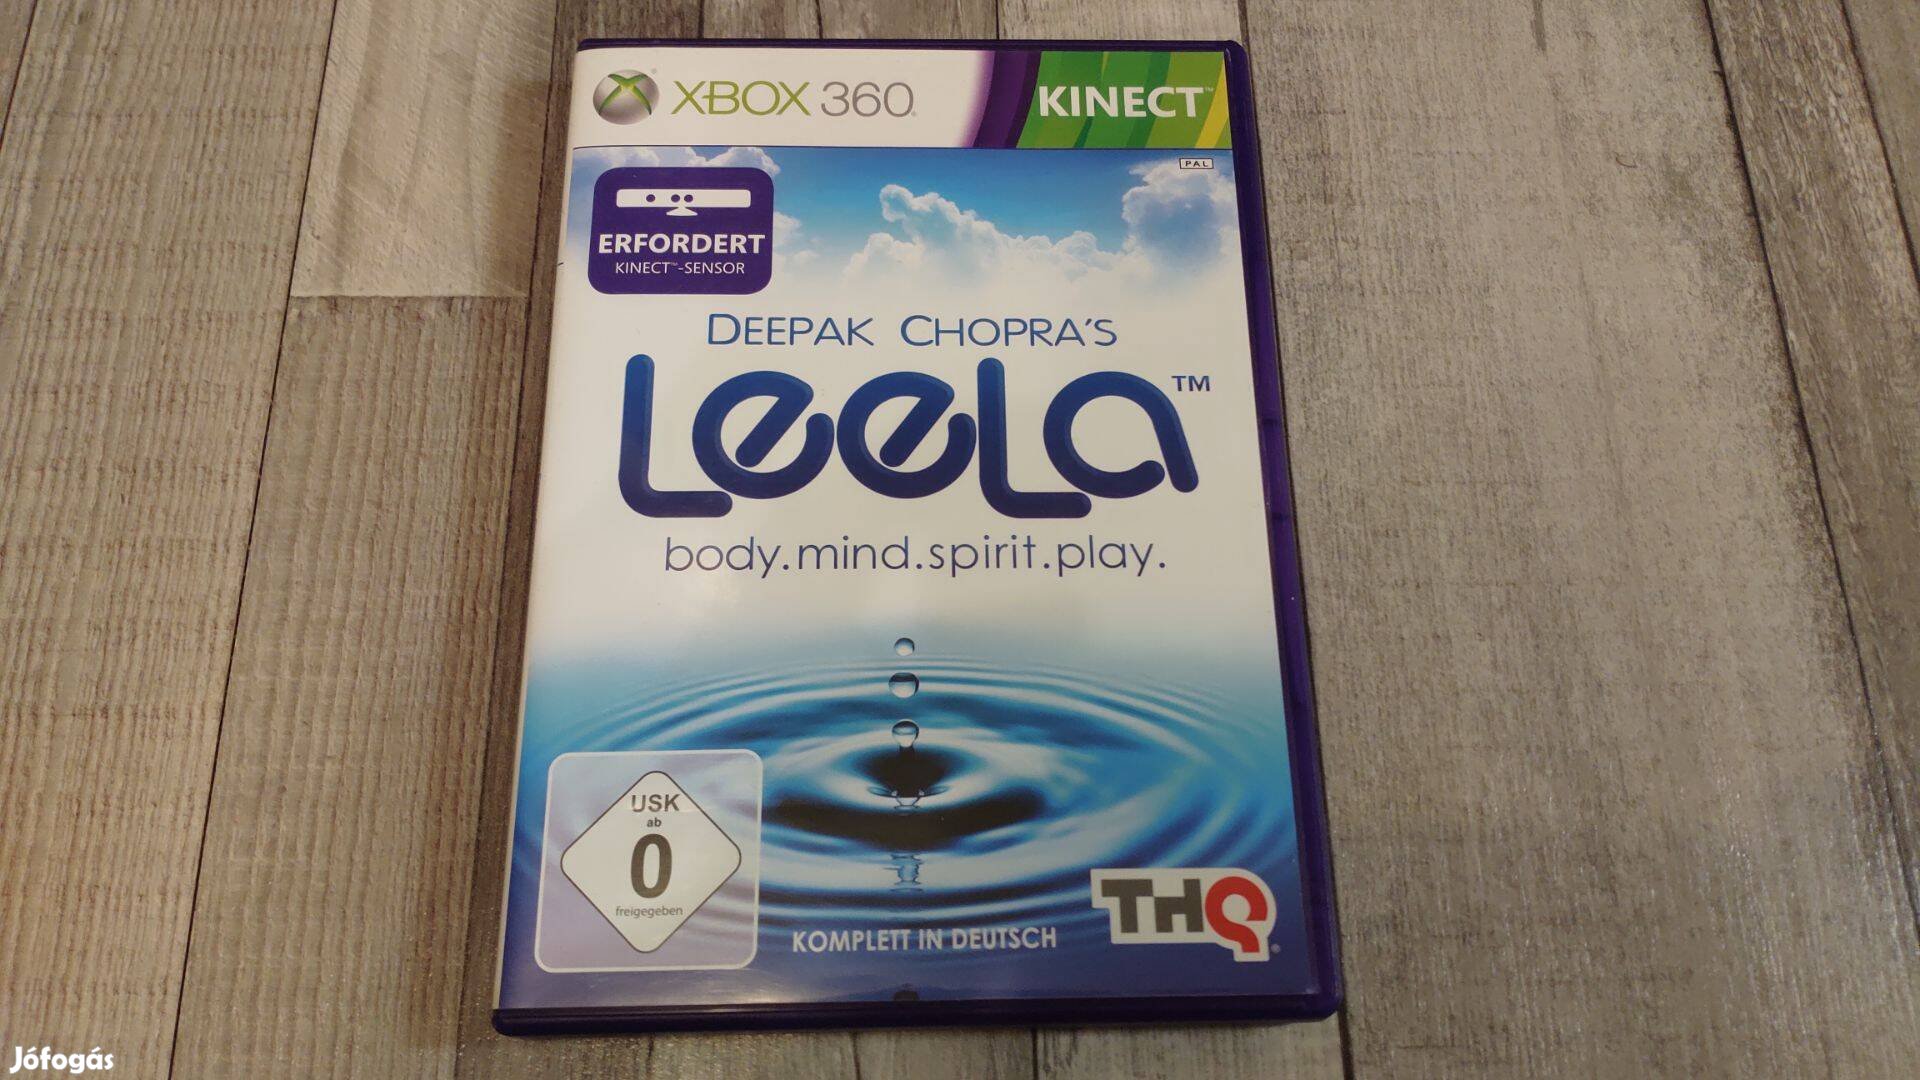 Eredeti Xbox 360 : Kinect Deepak Chopra's Leela Body Mind Spirit Play